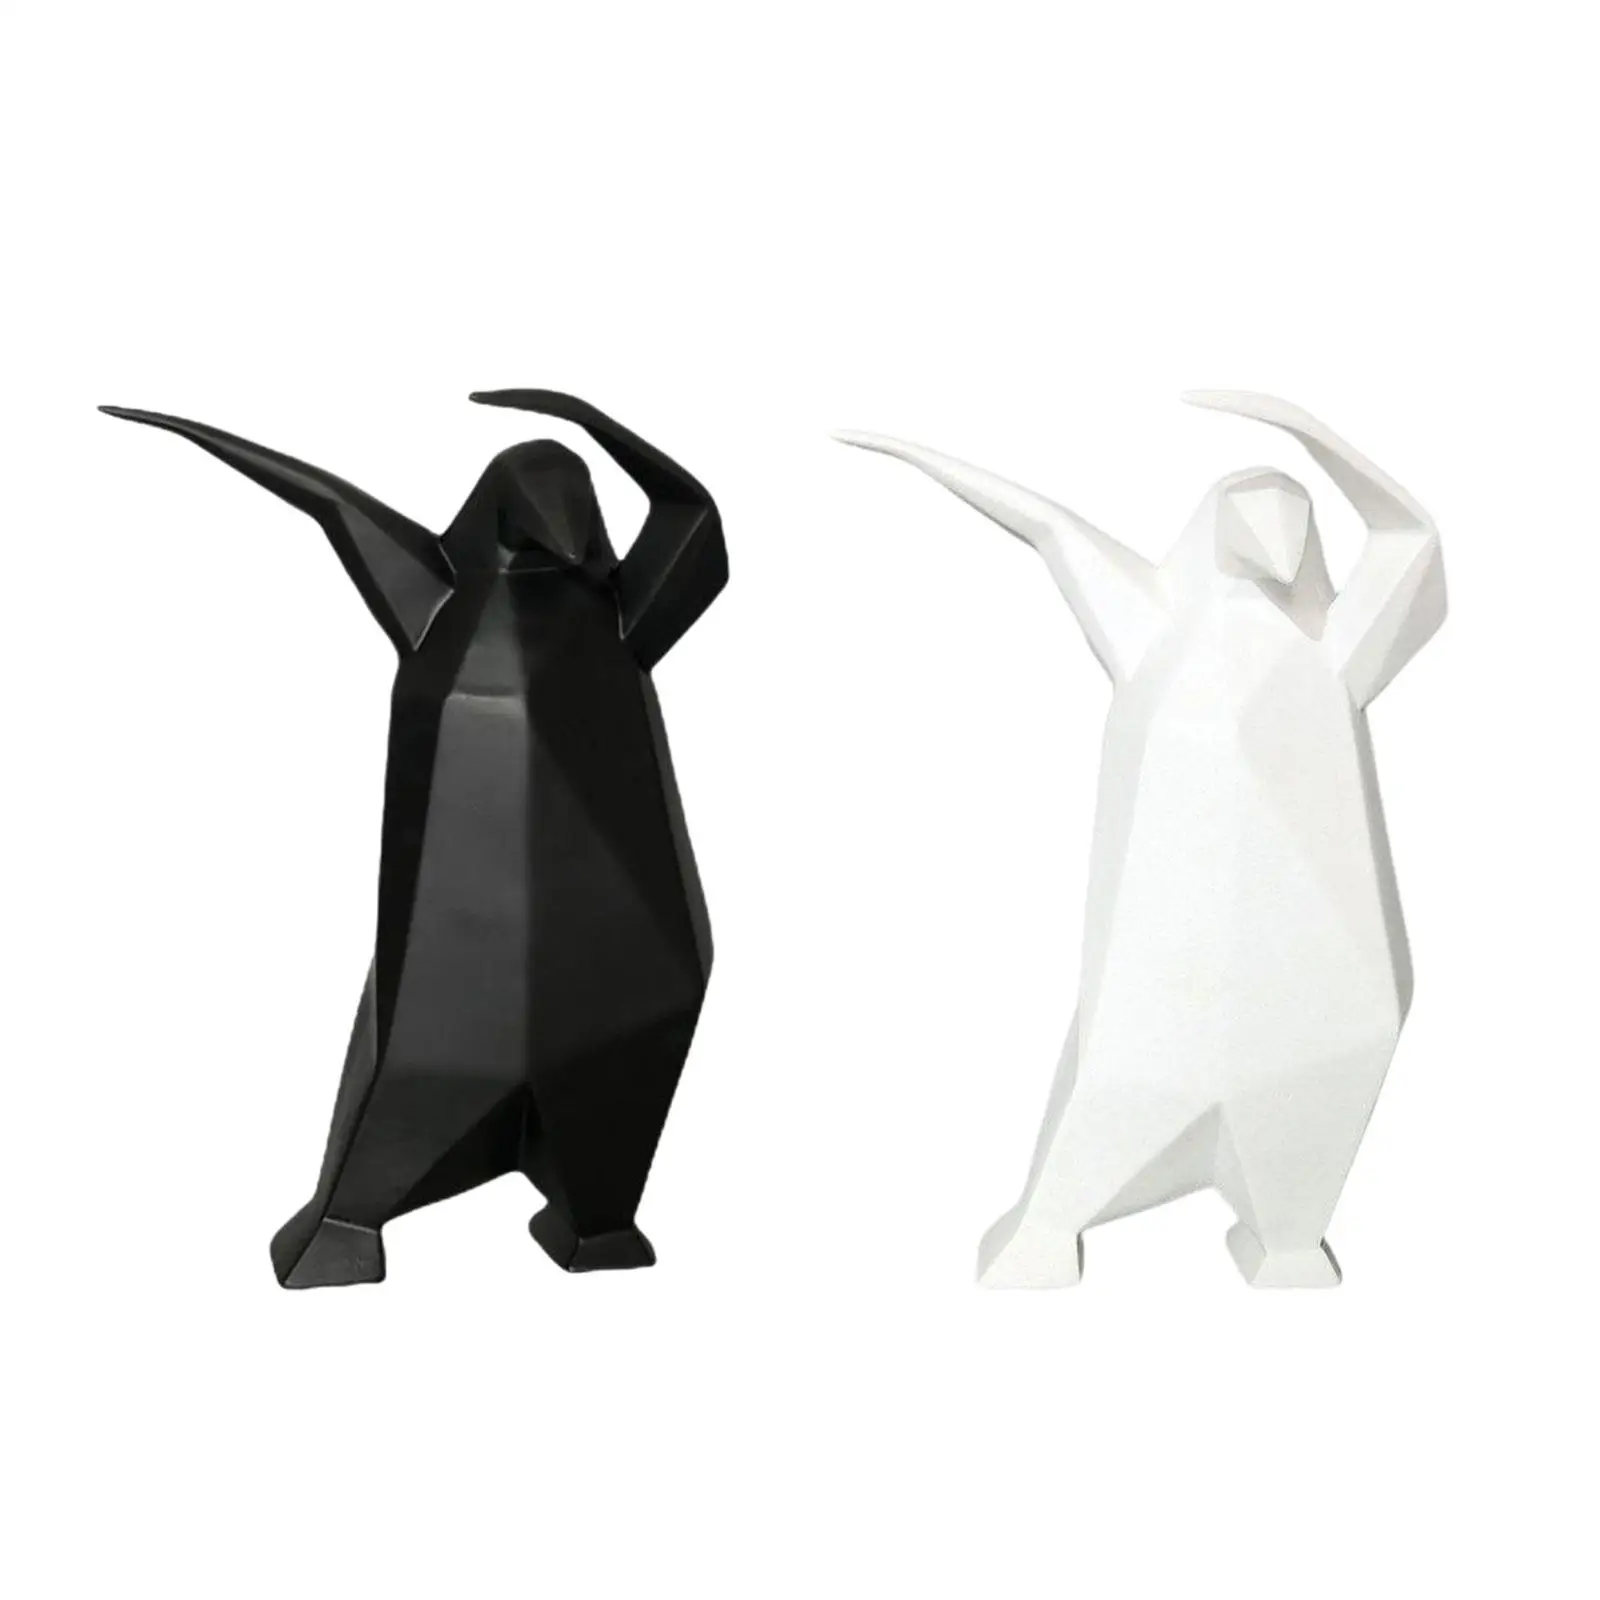 Penguin Sculpture Animal Figurine for Cabinets Living Room Cabinets Shelf